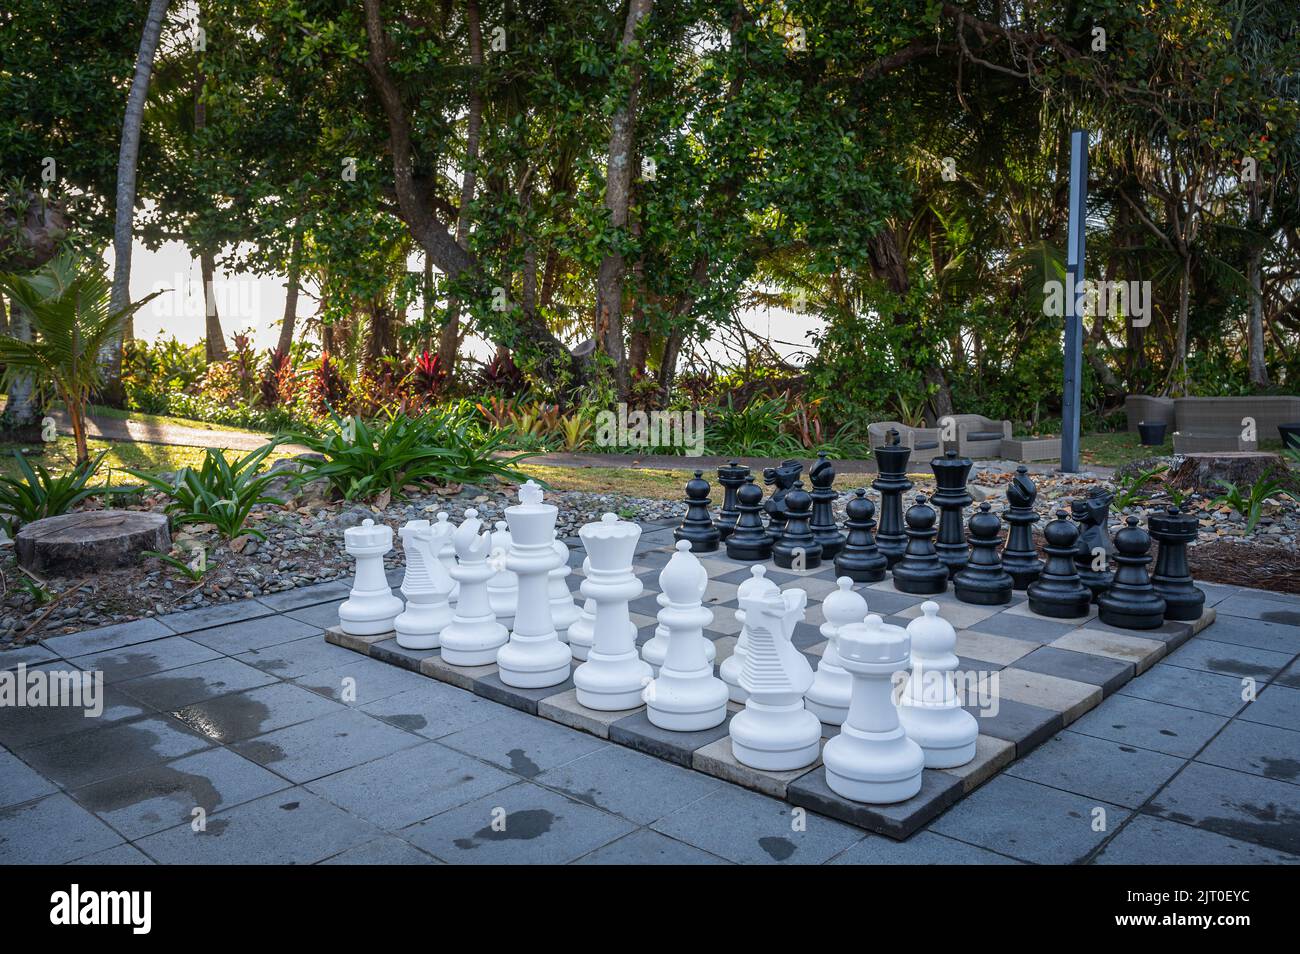 A beautifully organised tropical garden retreat, featuring a giant chess set, garden furniture on 4-mile beach resort Port Douglas, Qld, Australia. Stock Photo